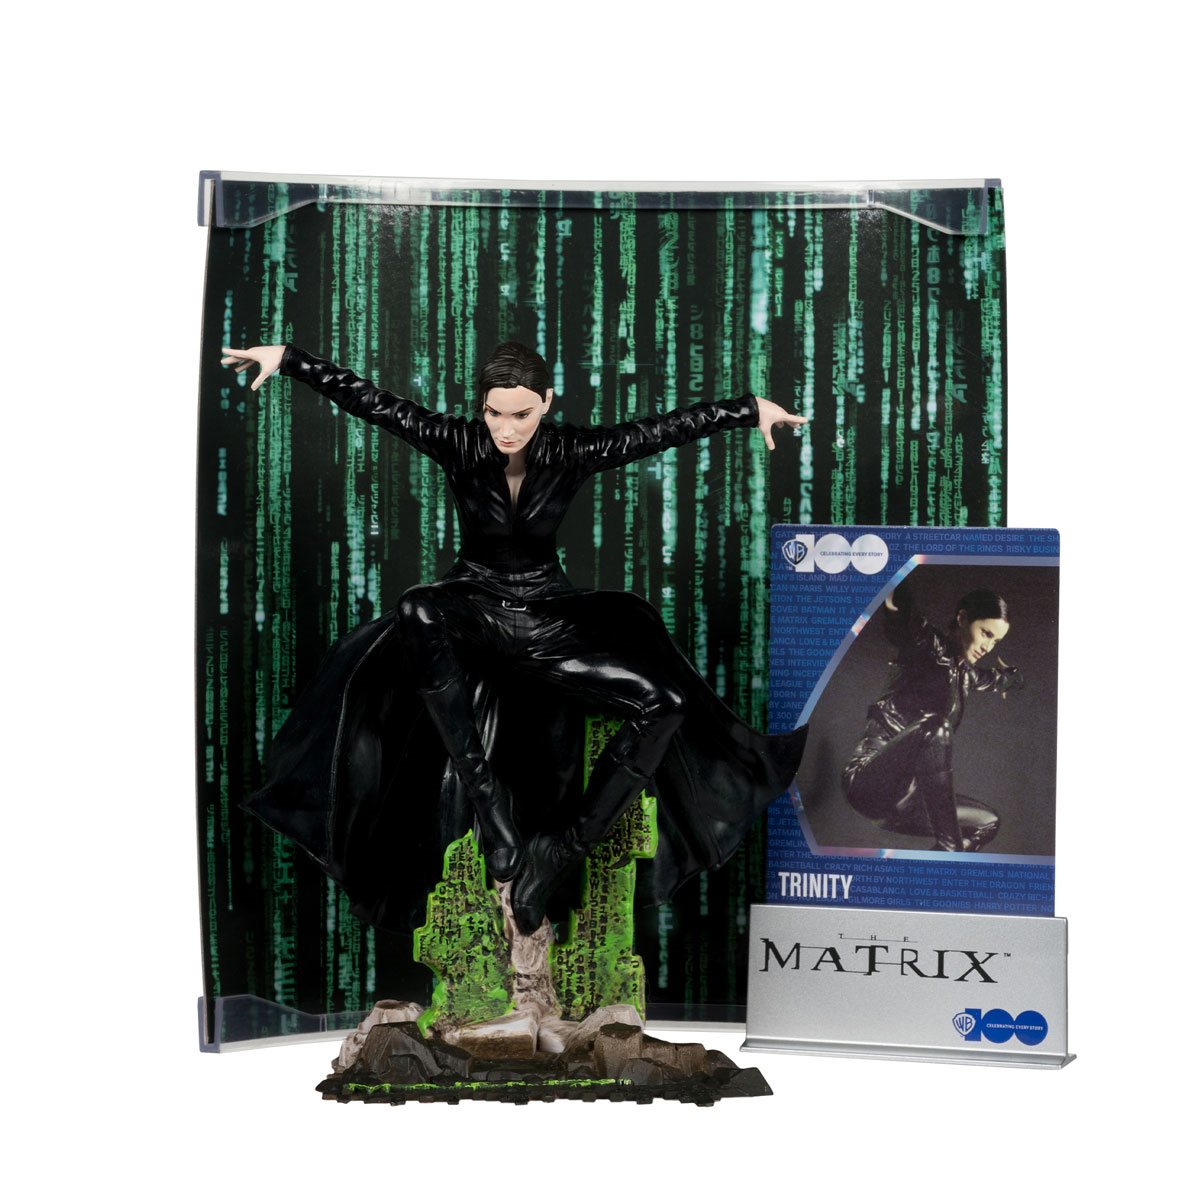 McFarlane Toys - Trinity (The Matrix) 6in Posed Figure, Movie Maniacs